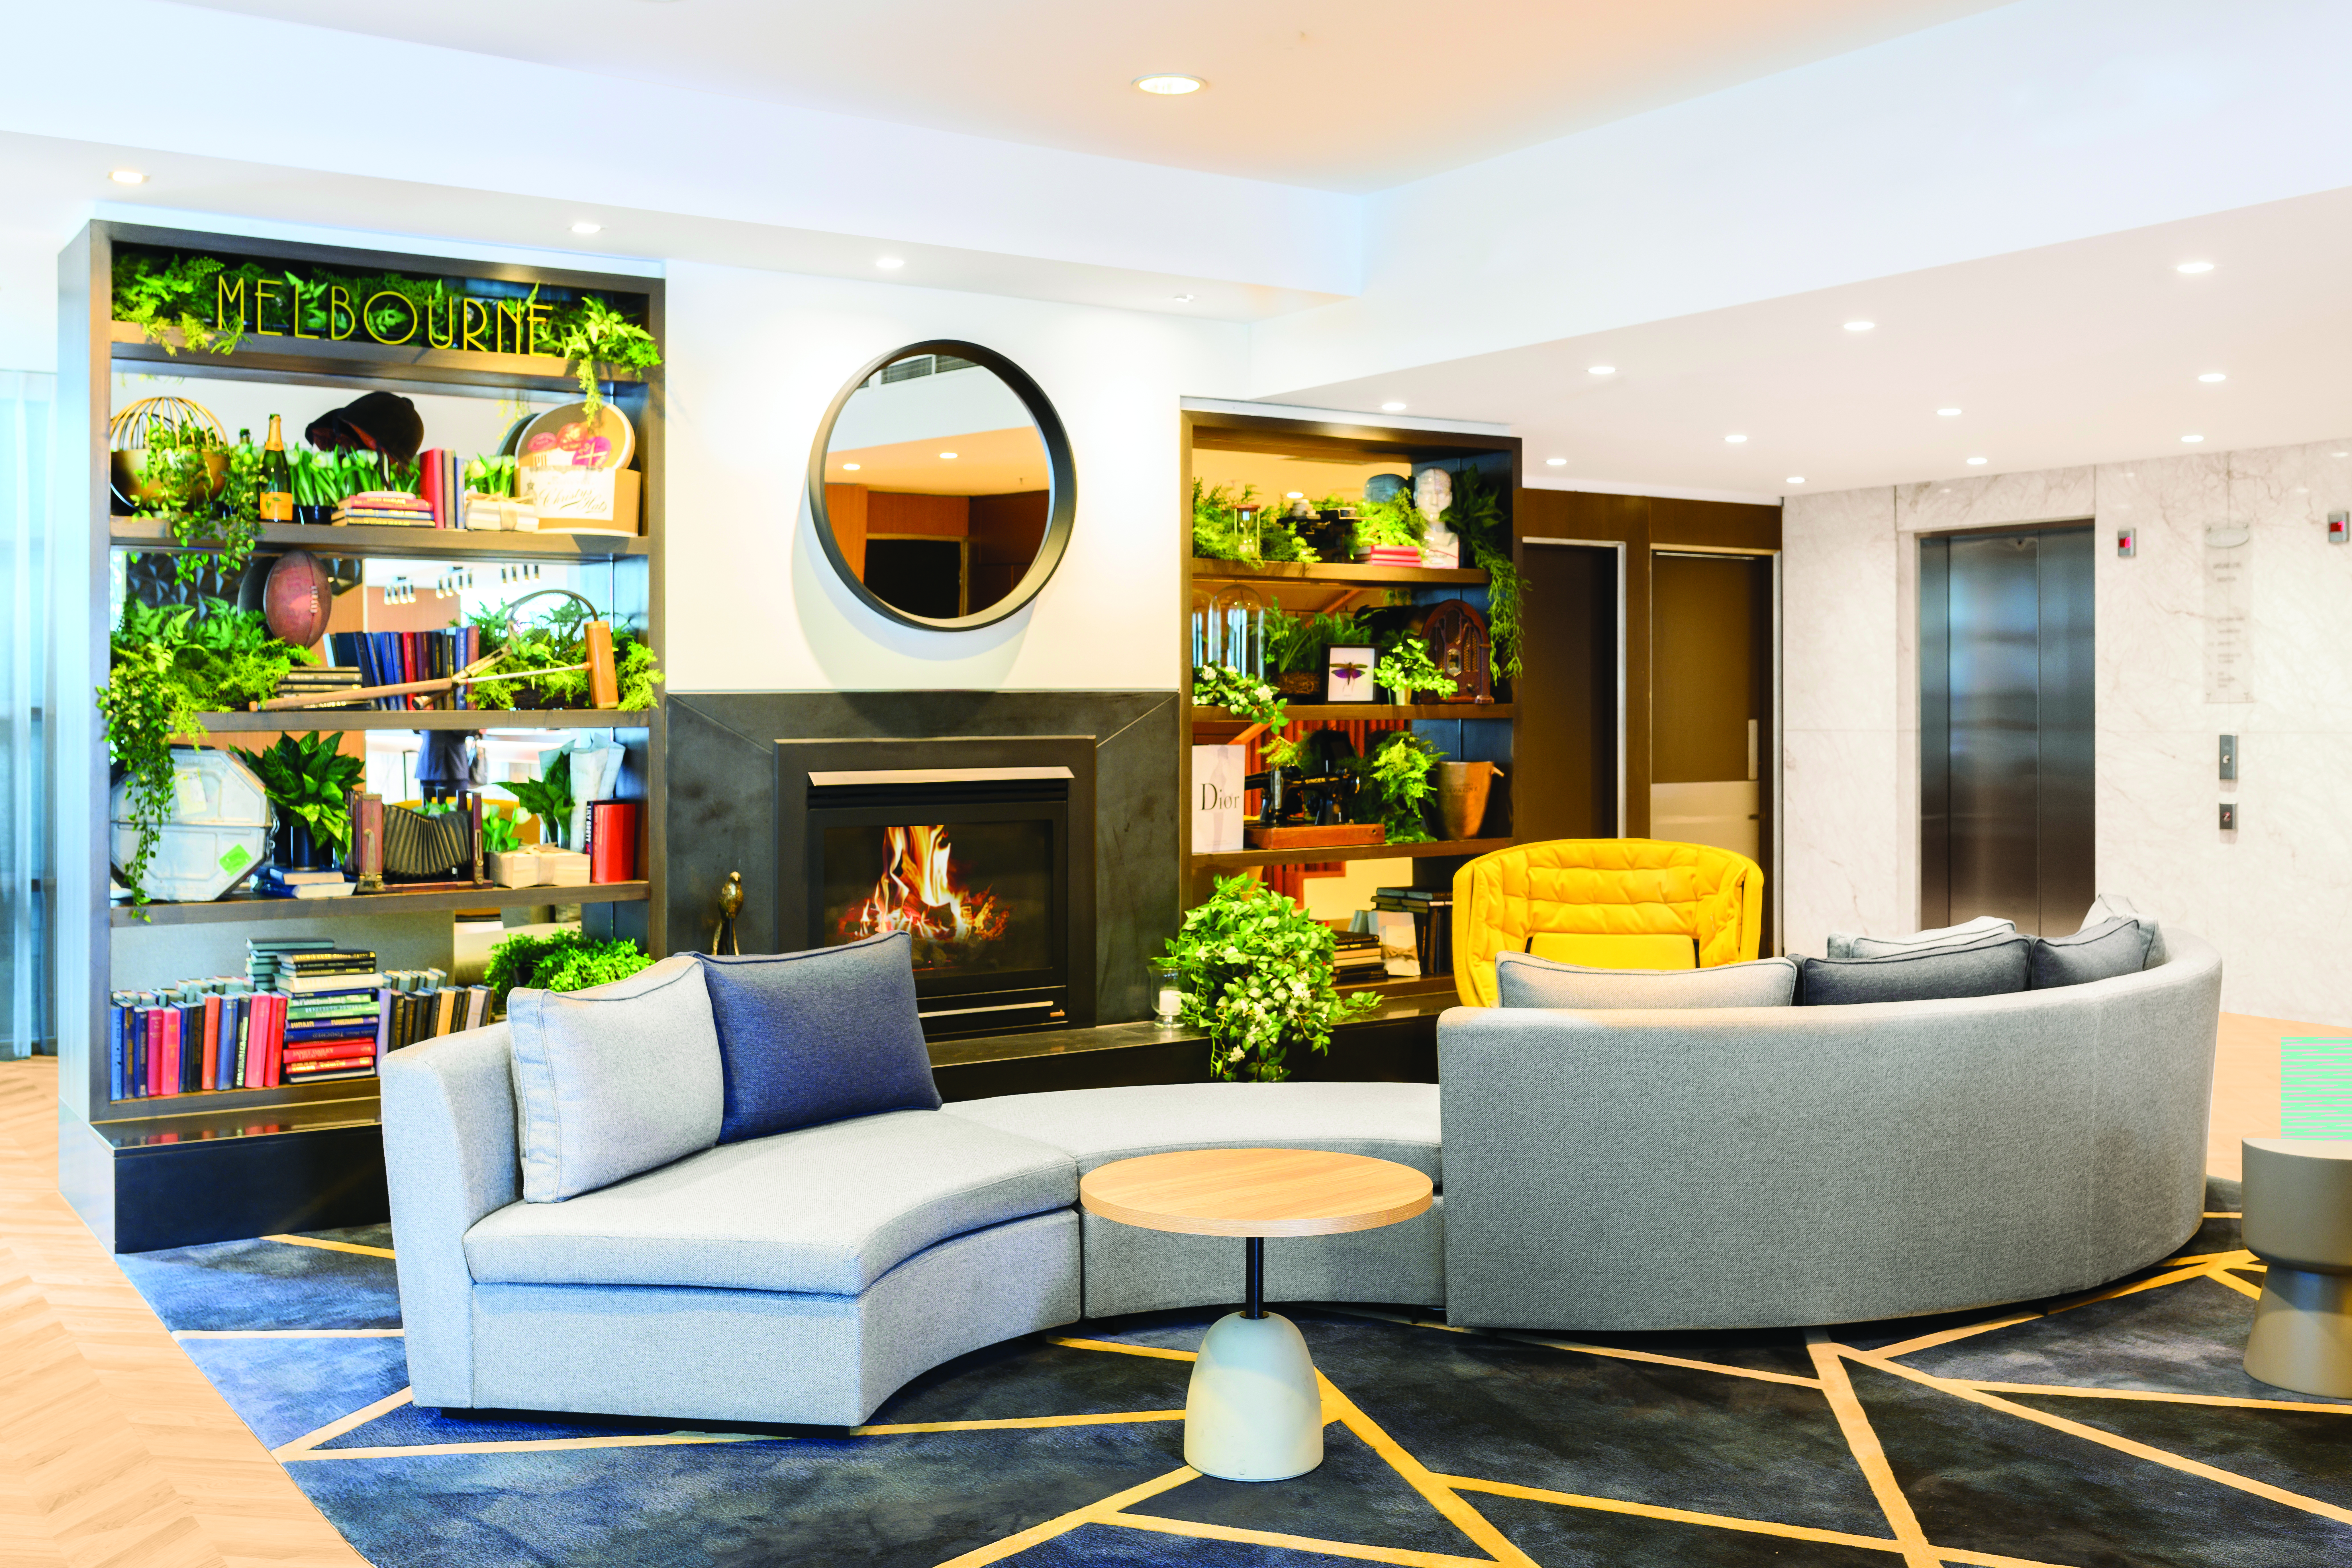 Adina Apartment Hotel Melbourne Northbank’s striking refurbishment.